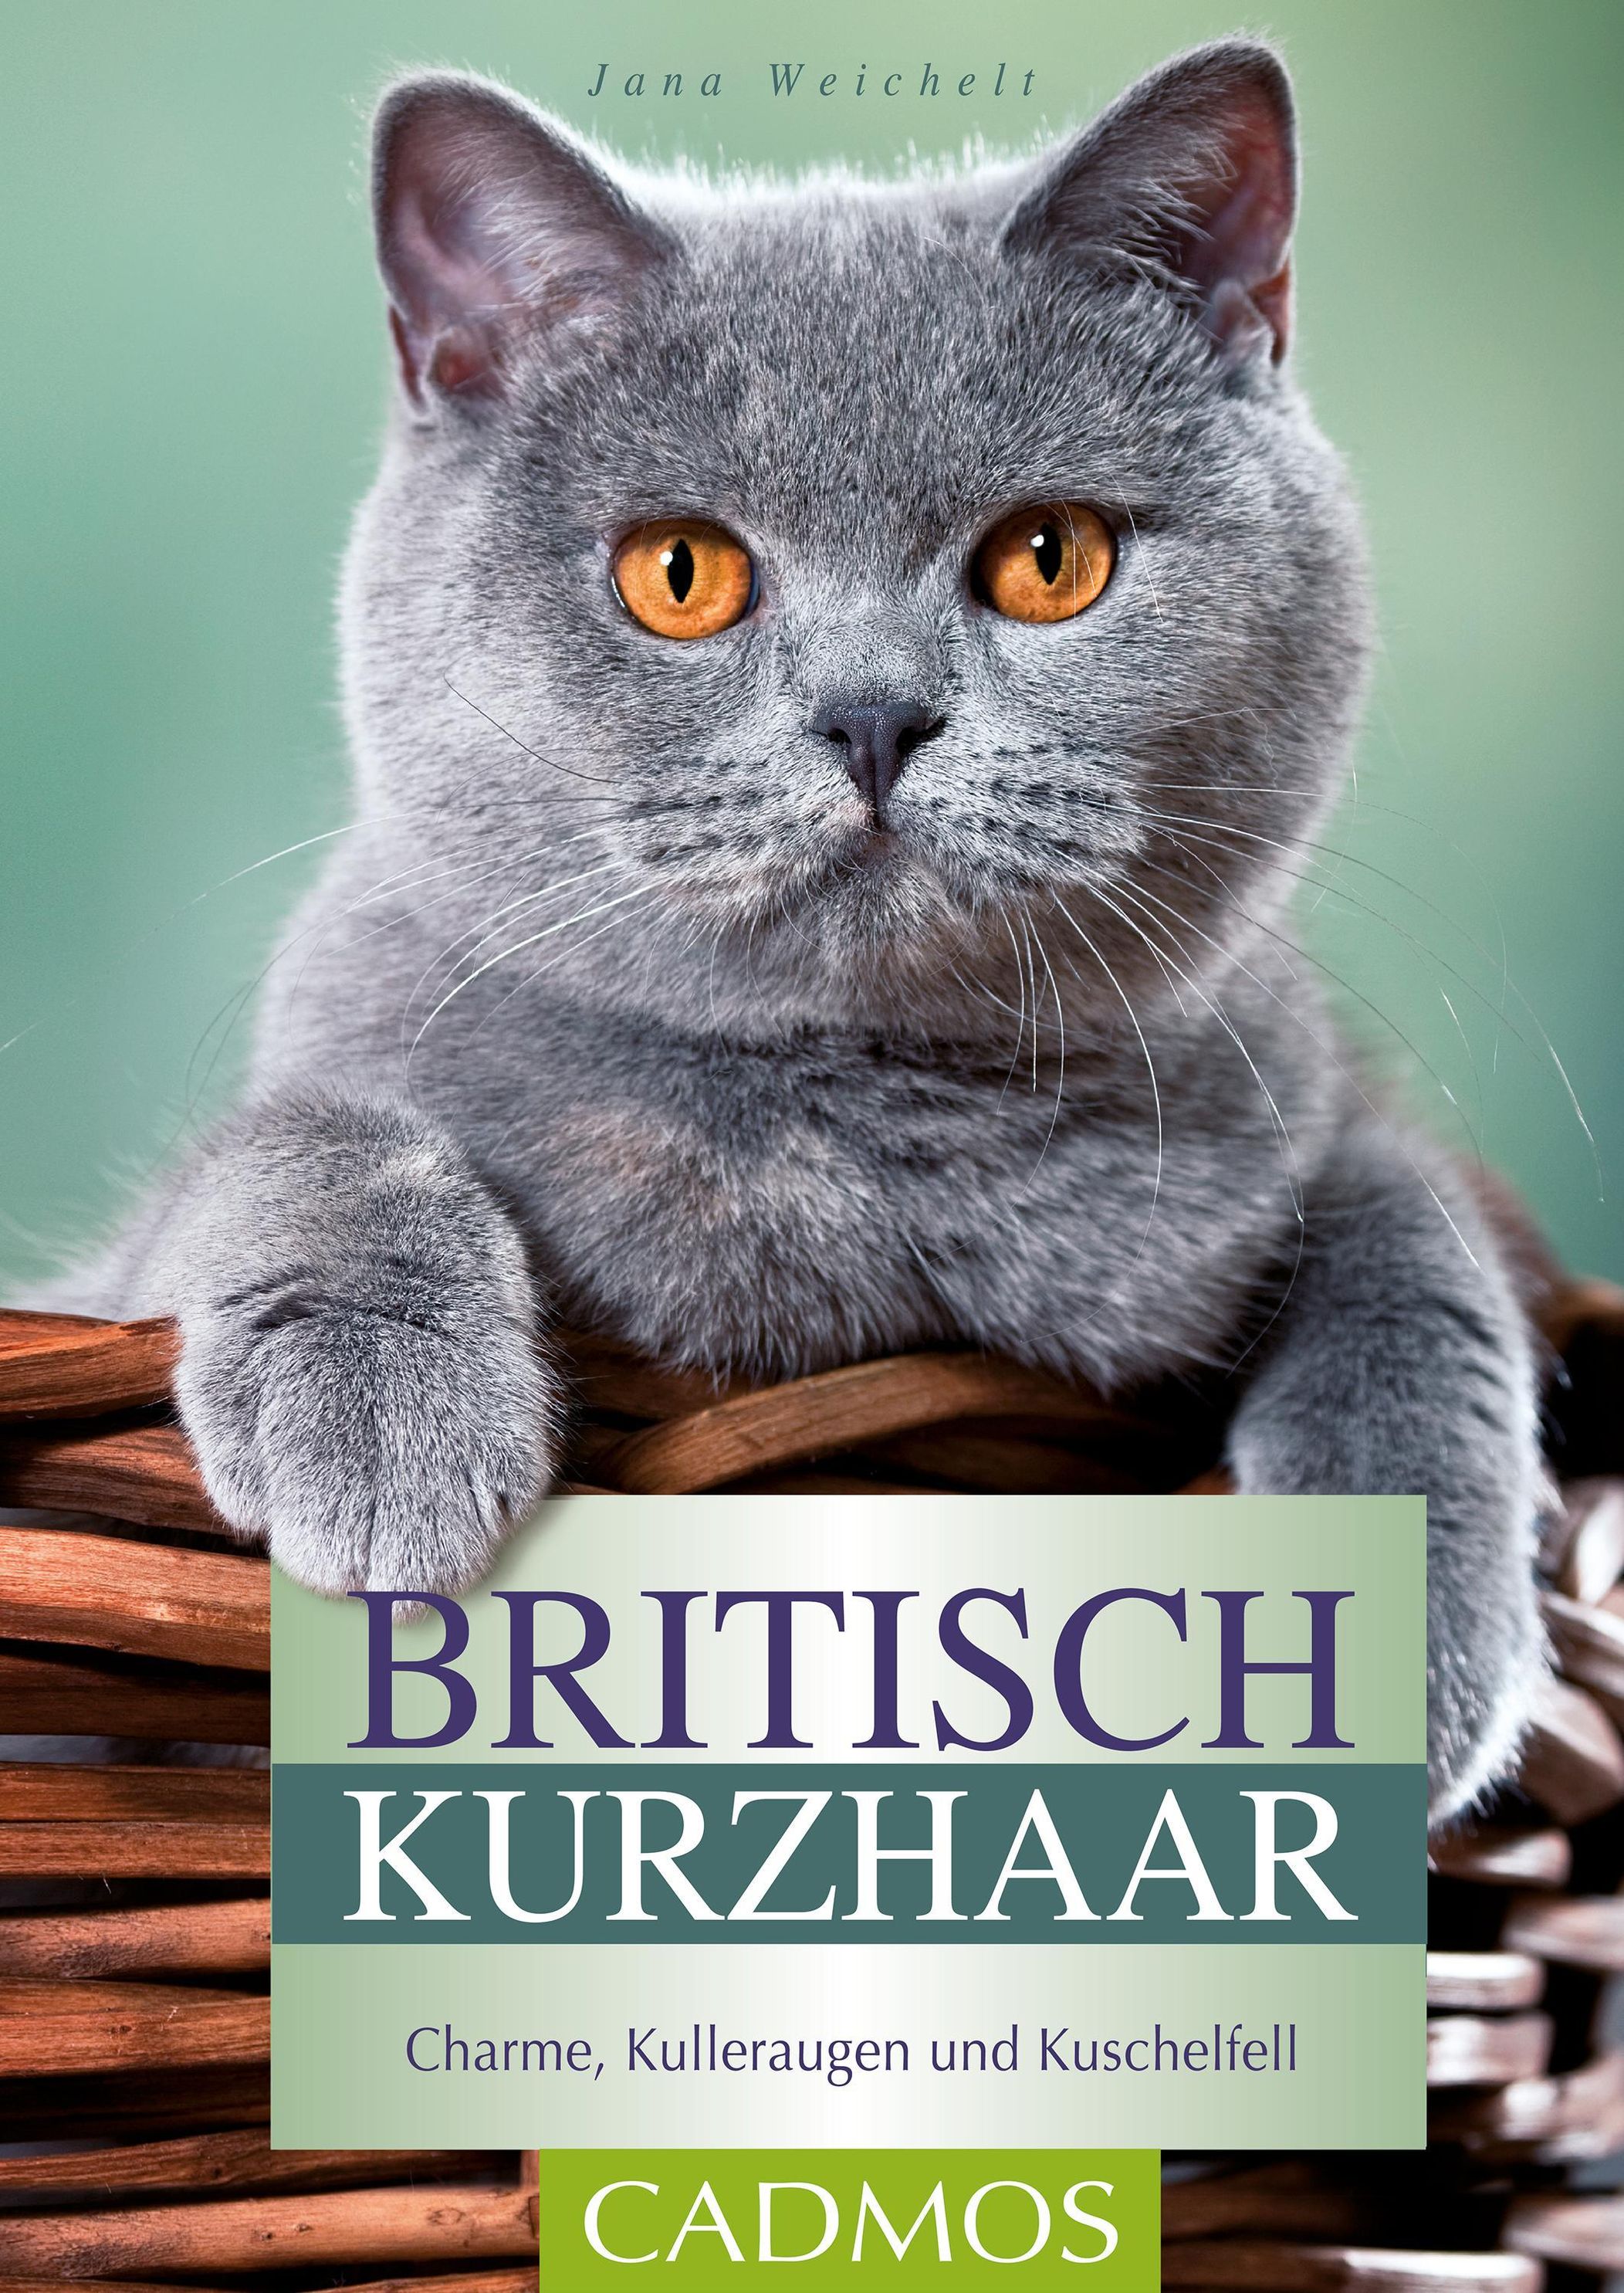 Britisch Kurzhaar Katzen eBook v. Jana Weichelt | Weltbild